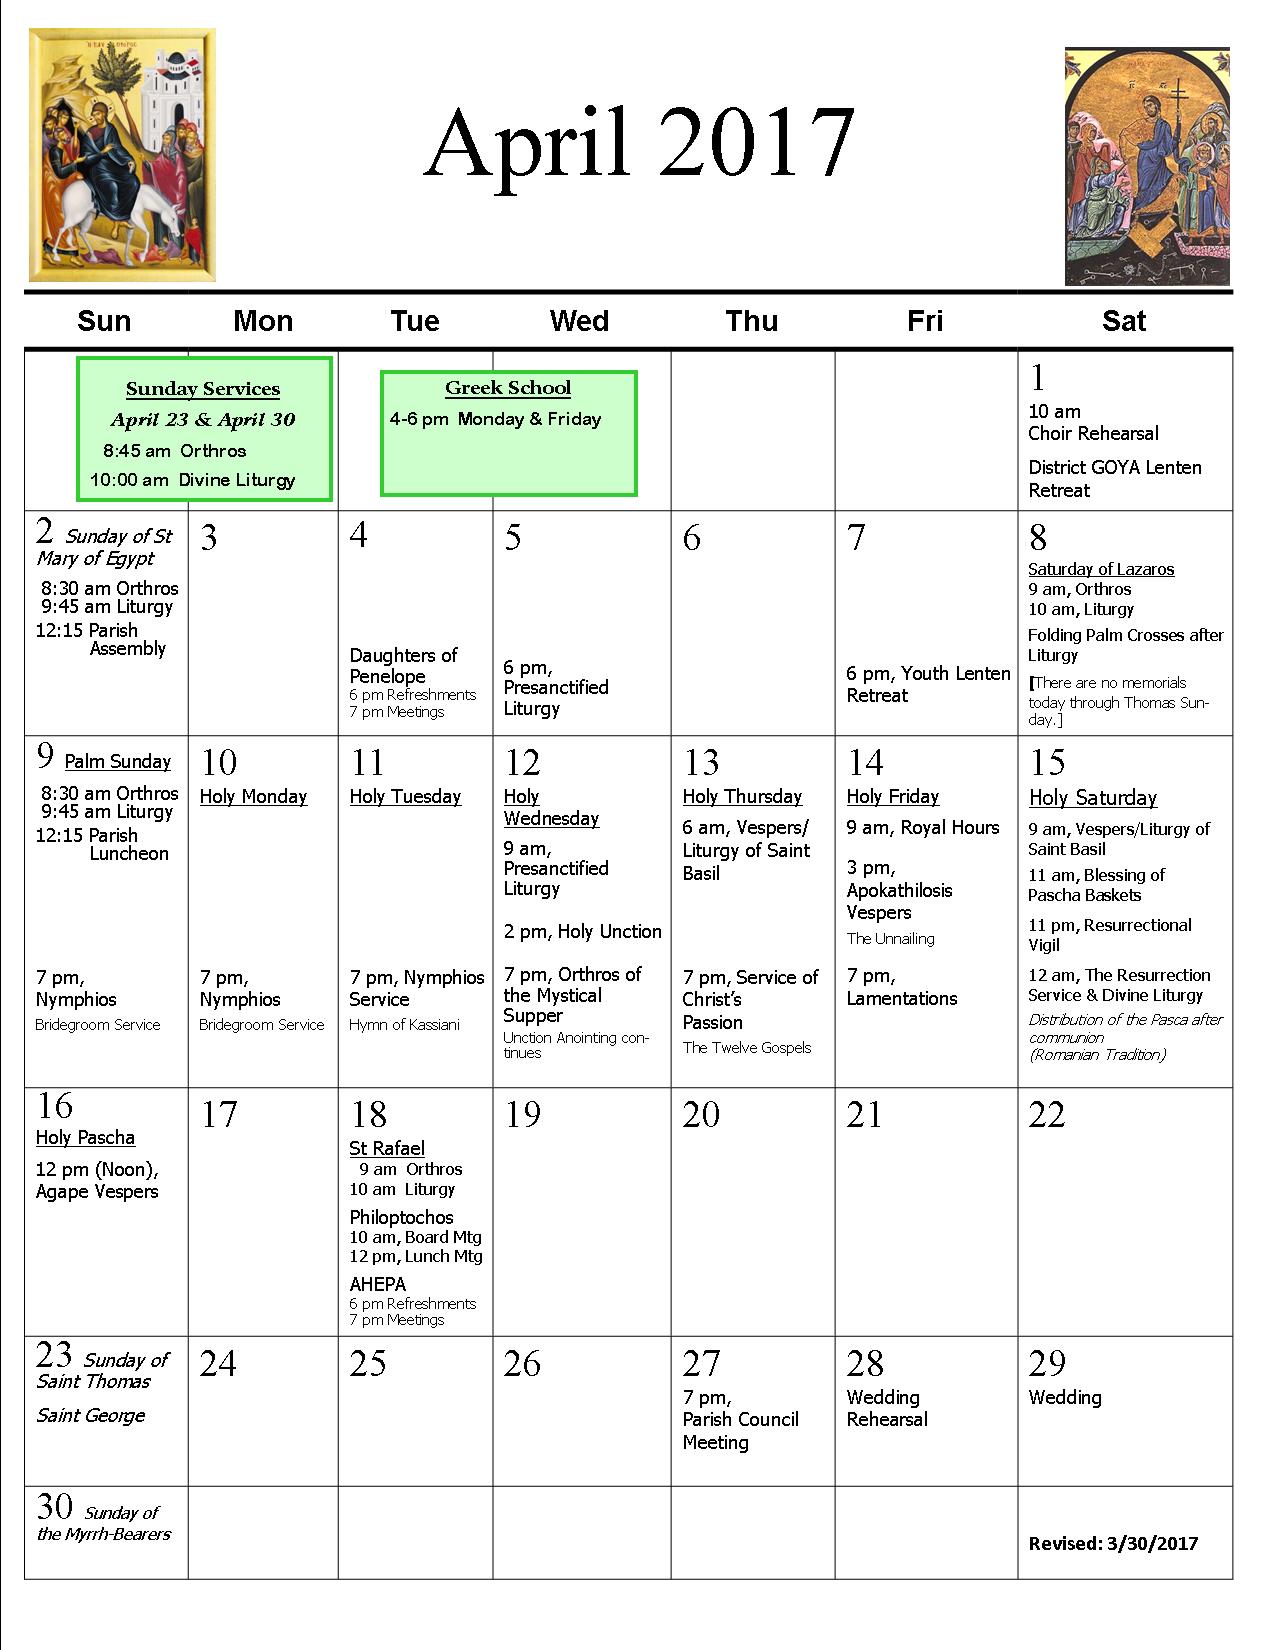 April 2017 Calendar, revised 3-30-17